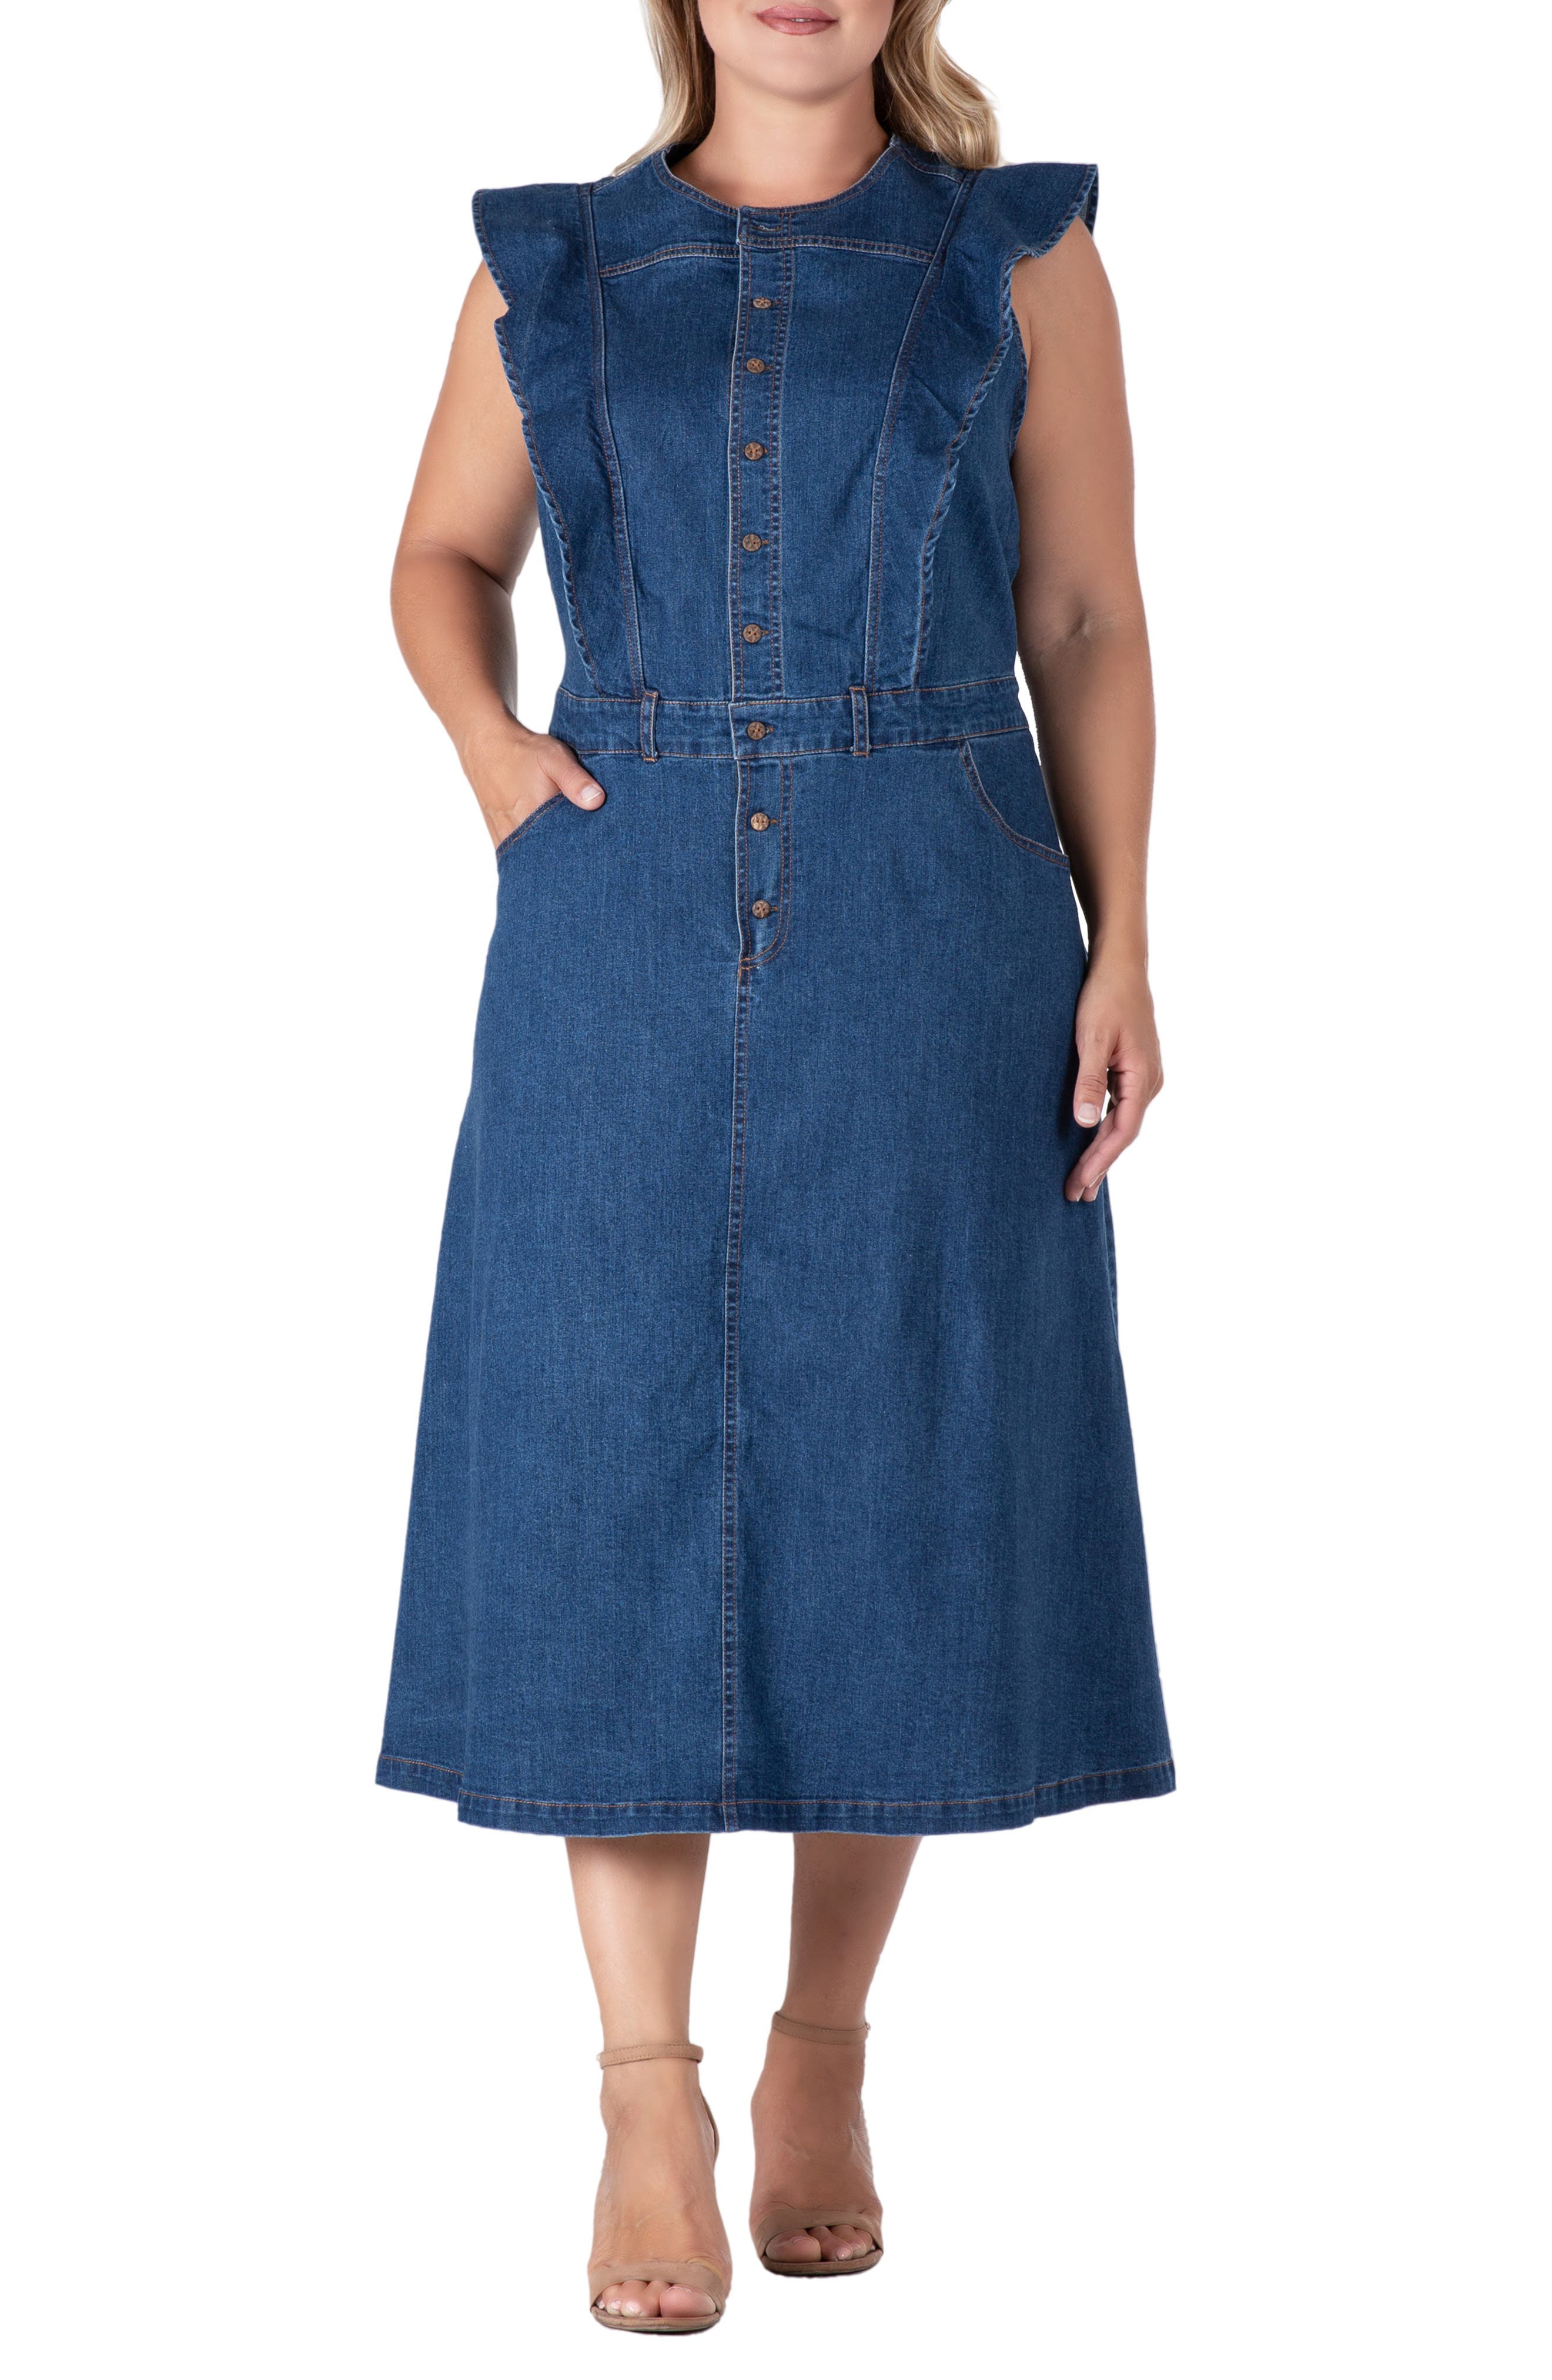 denim dresses for older ladies